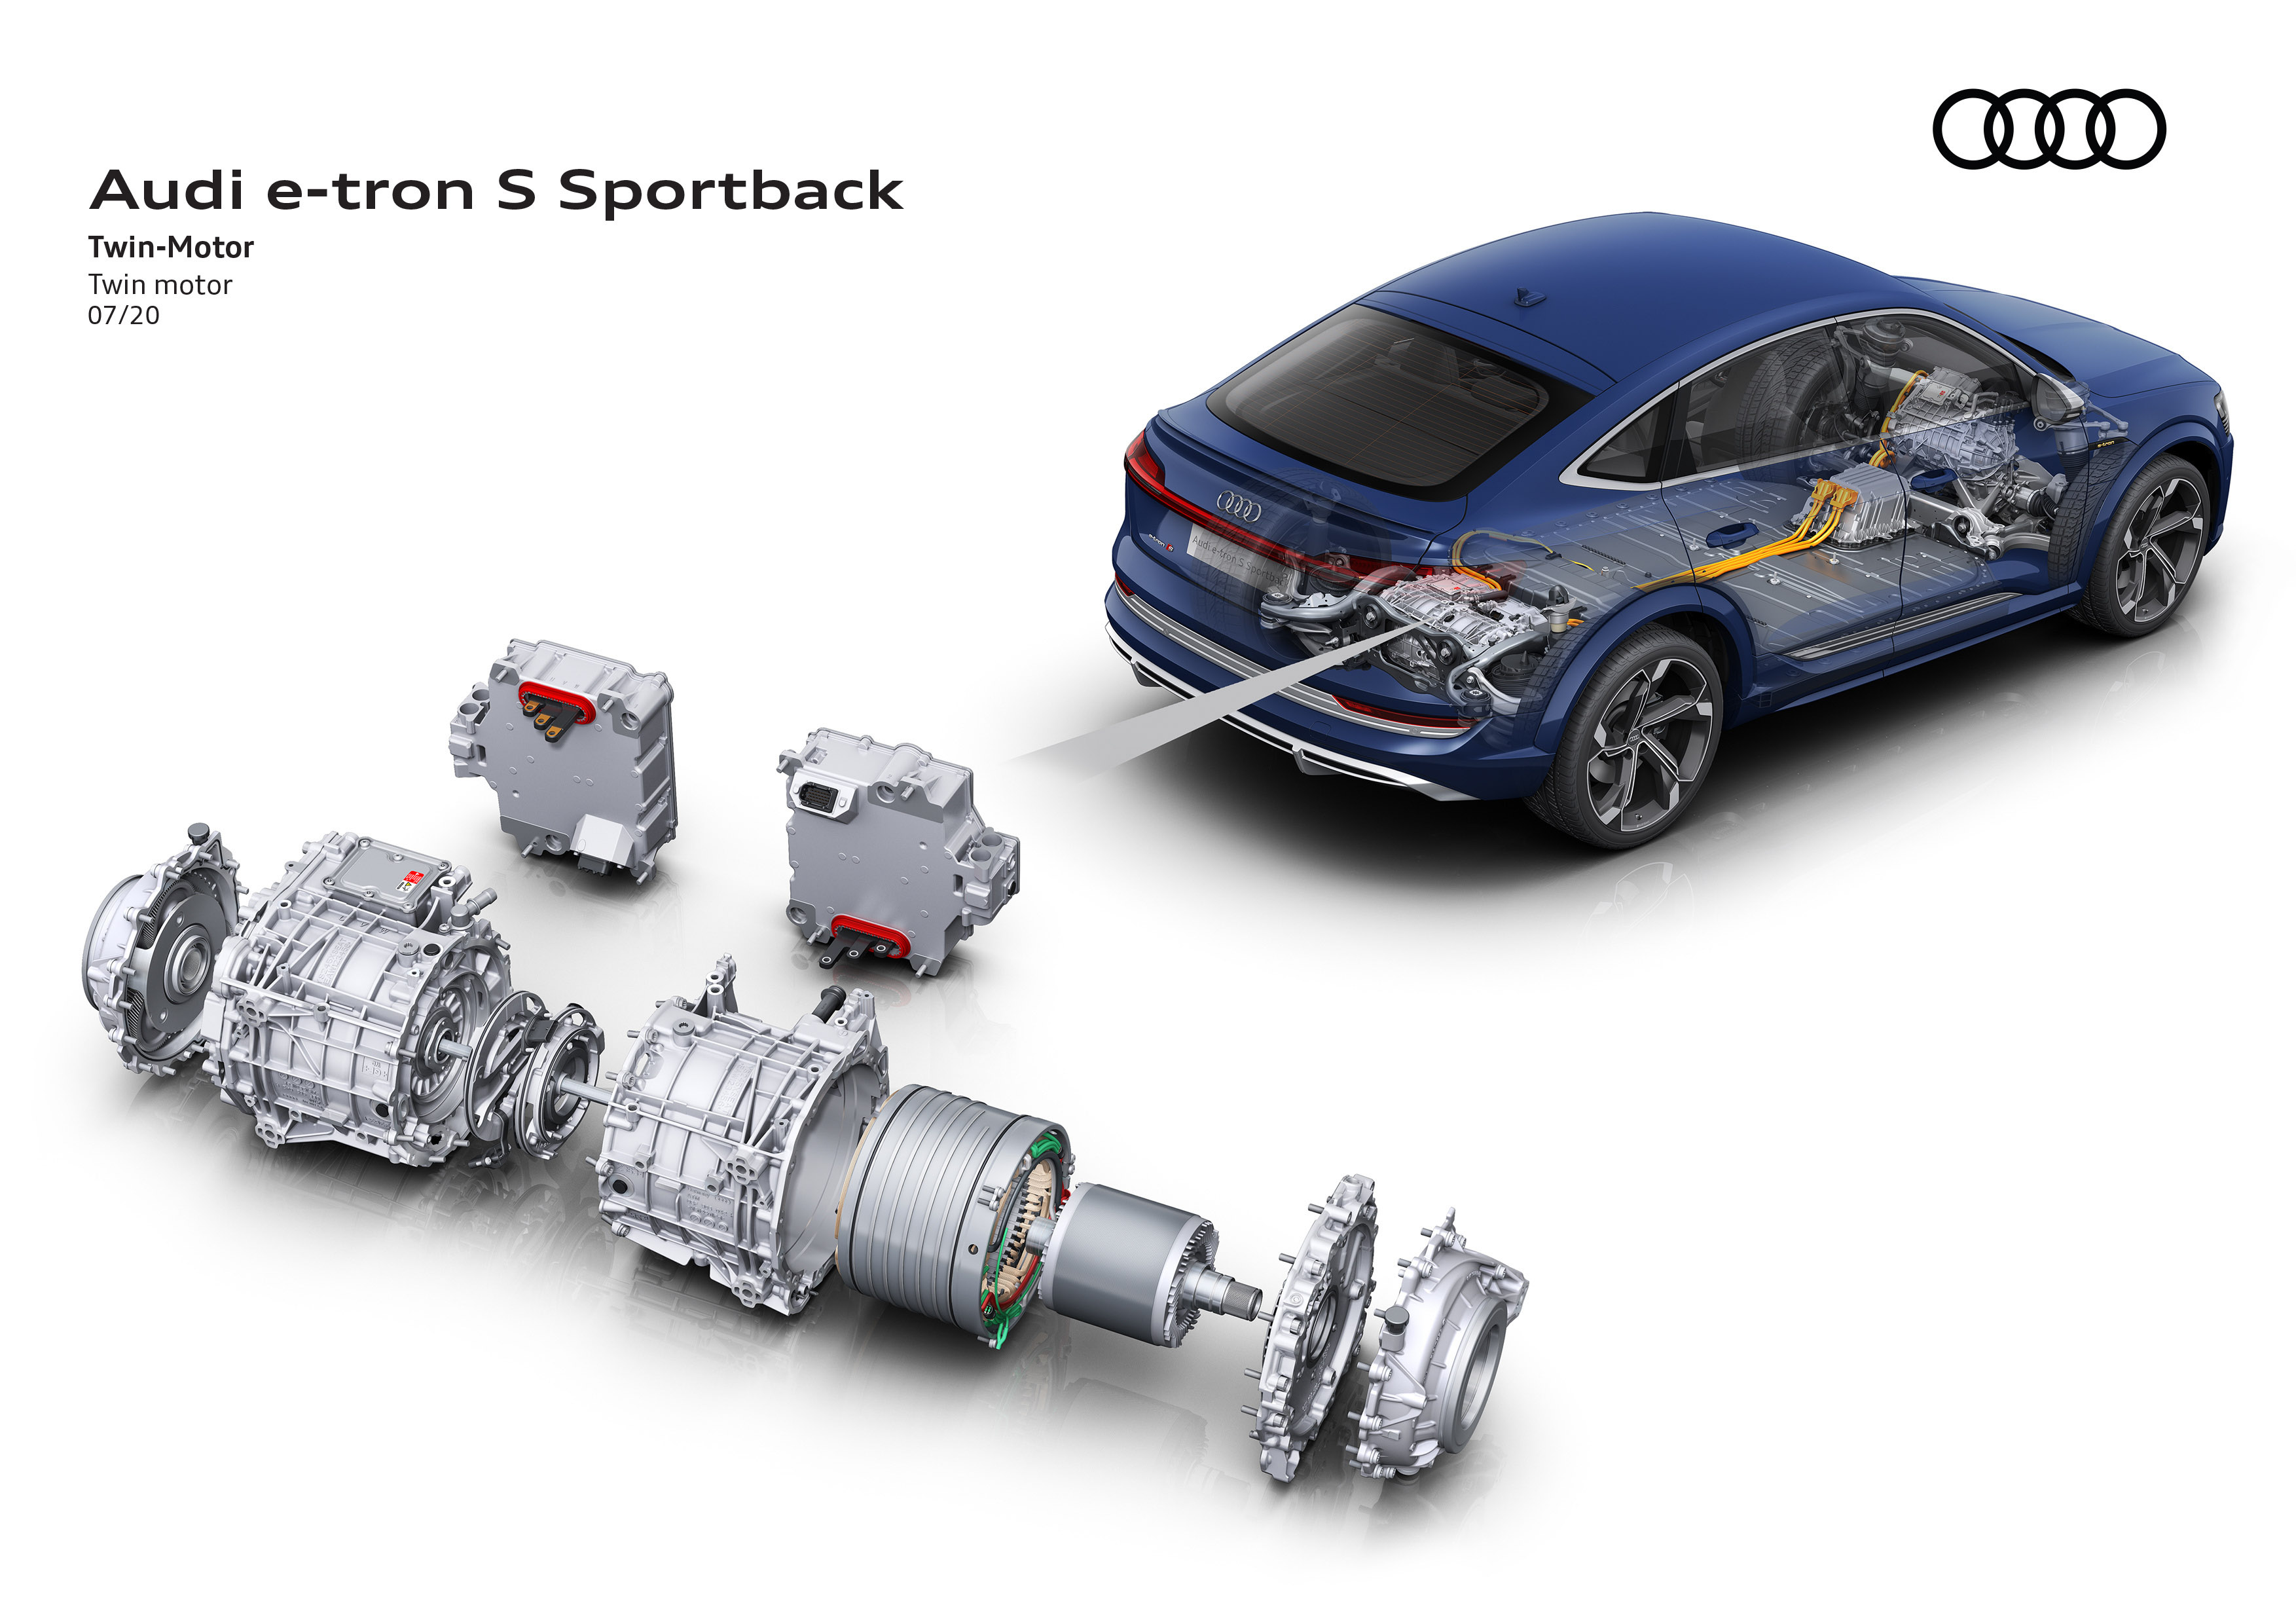 https://s1.paultan.org/image/2020/09/Audi-e-tron-S-Sportback-79.jpg